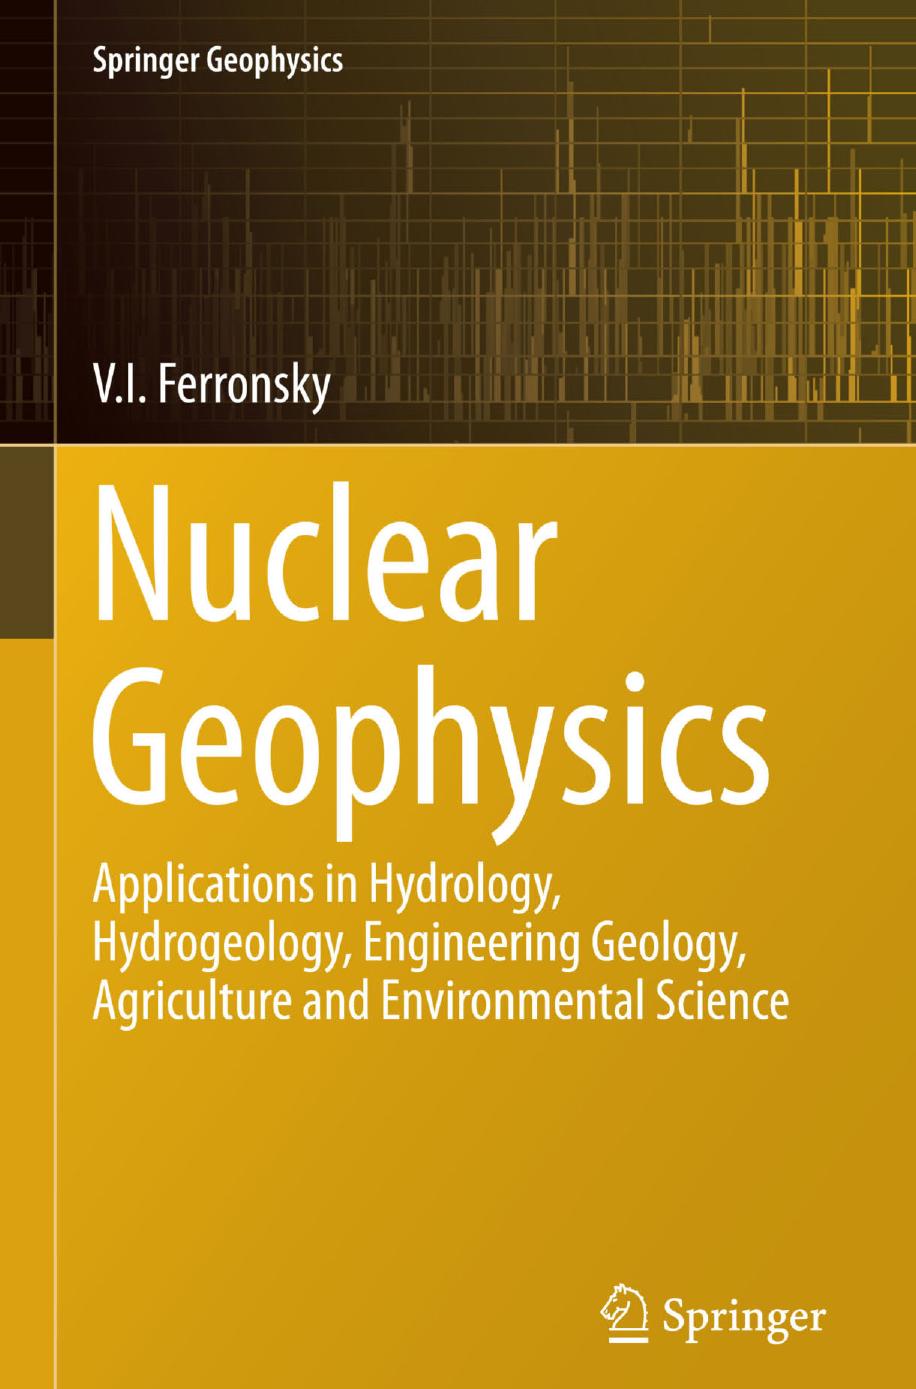 Nuclear Geophysics Applications in Hydrology, Hydrogeology, Engineering Geology 2015